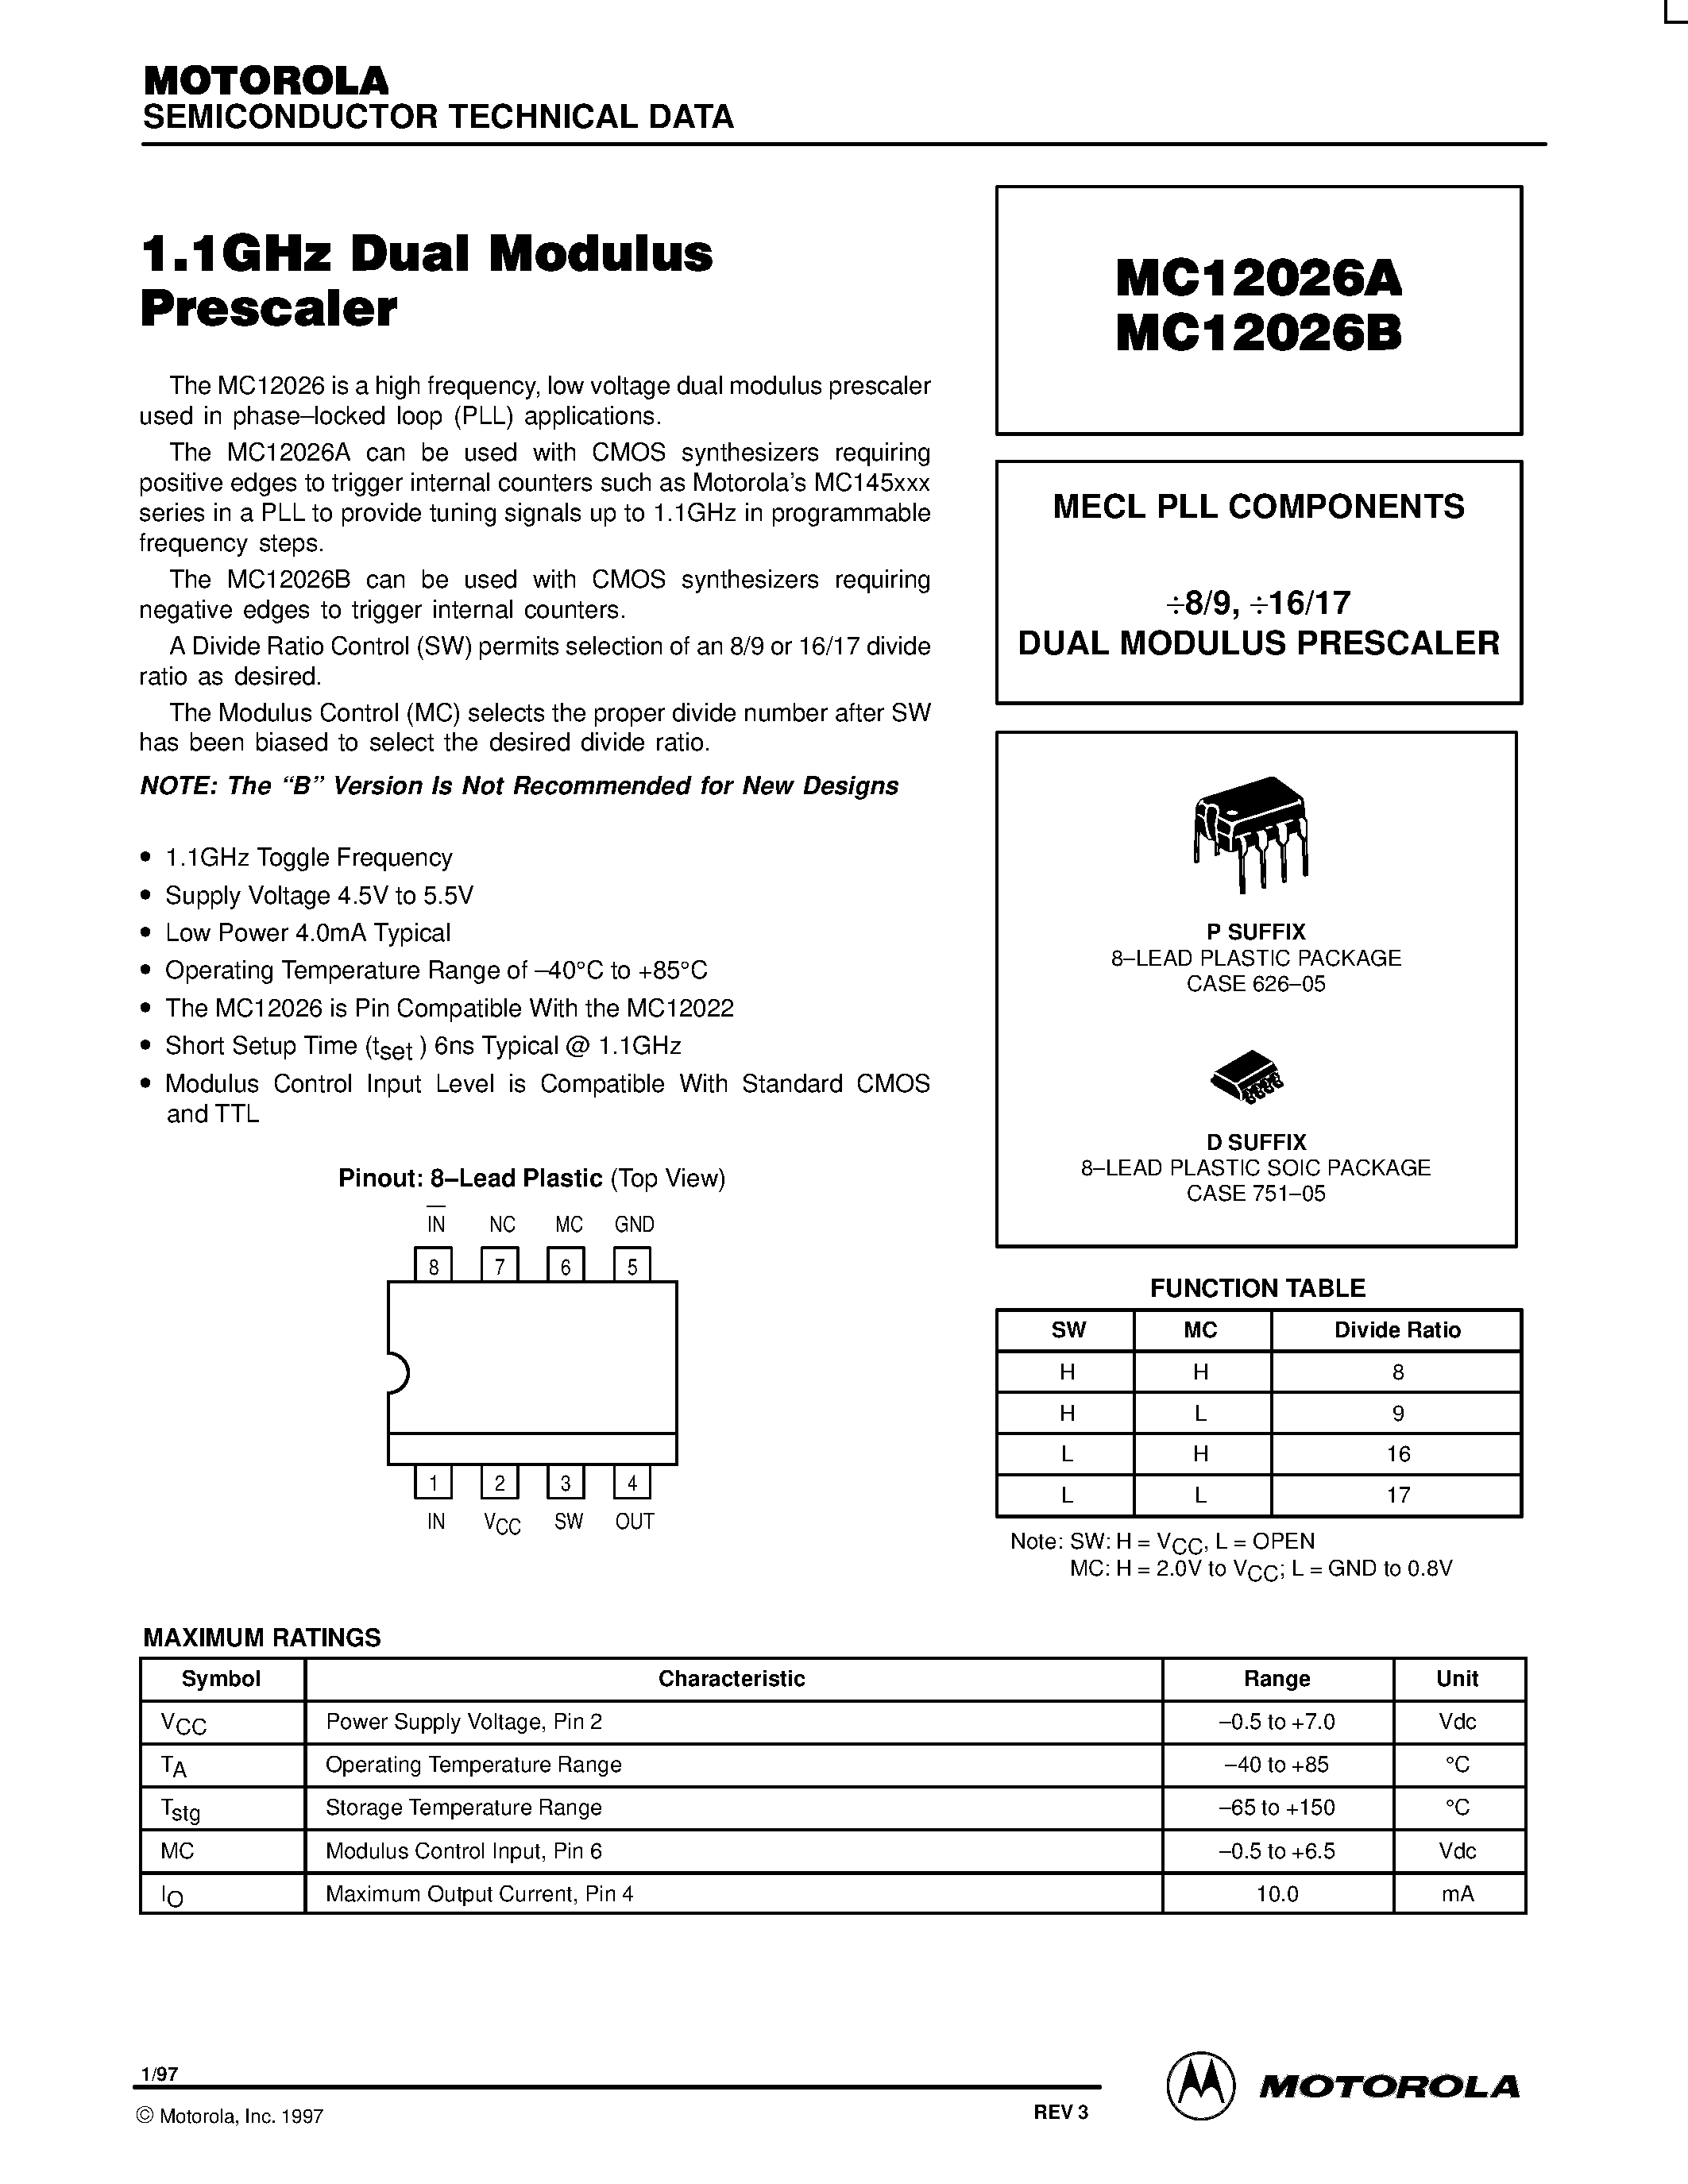 Datasheet MC12026AD - MECL PLL COMPONENTS 8/9 / 16/17 DUAL MODULUS PRESCALER page 1